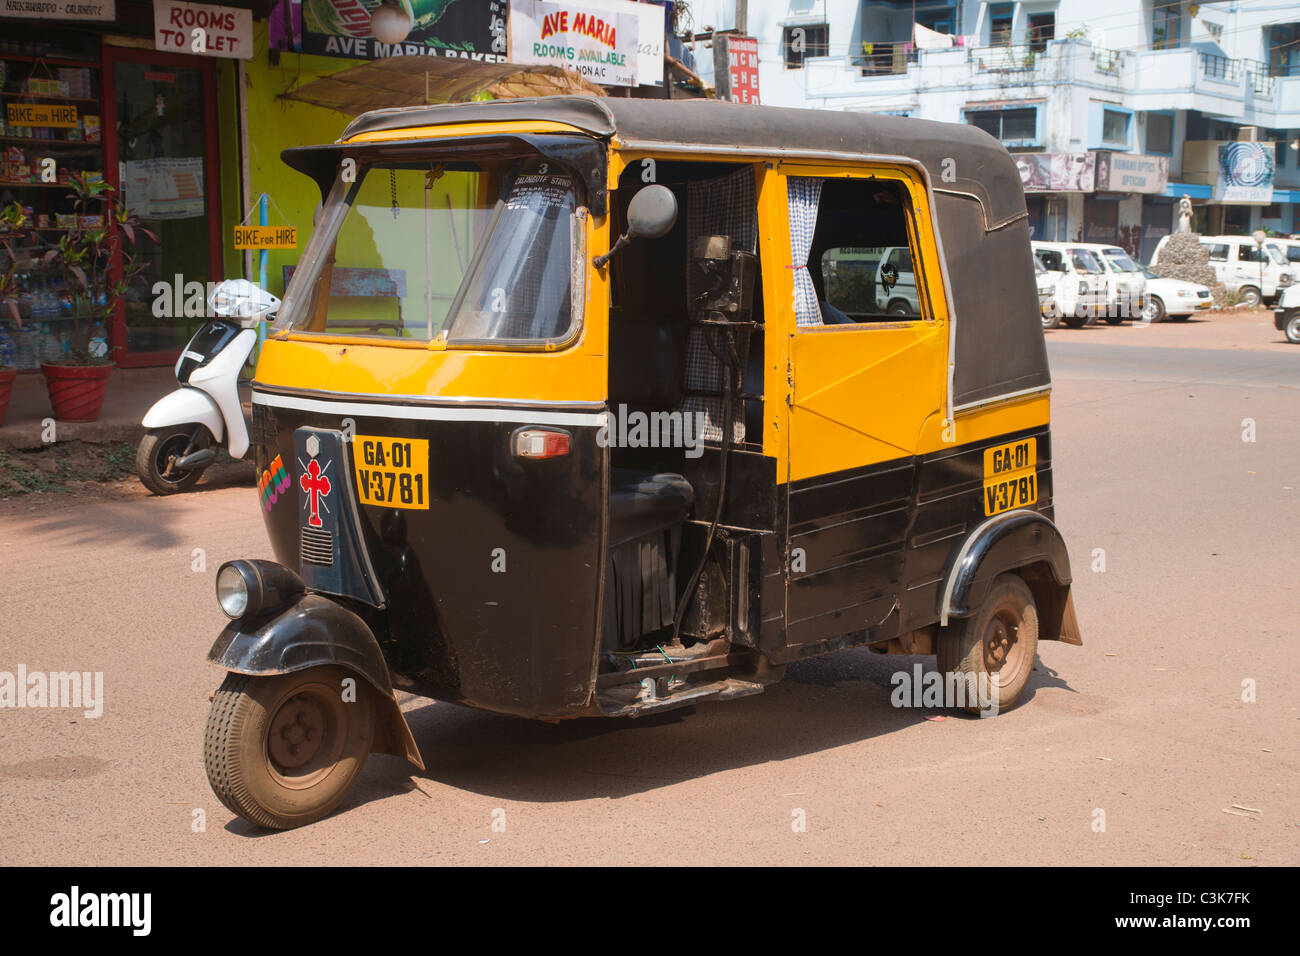 Tuk-tuk or auto rickshaw in Stock Photo